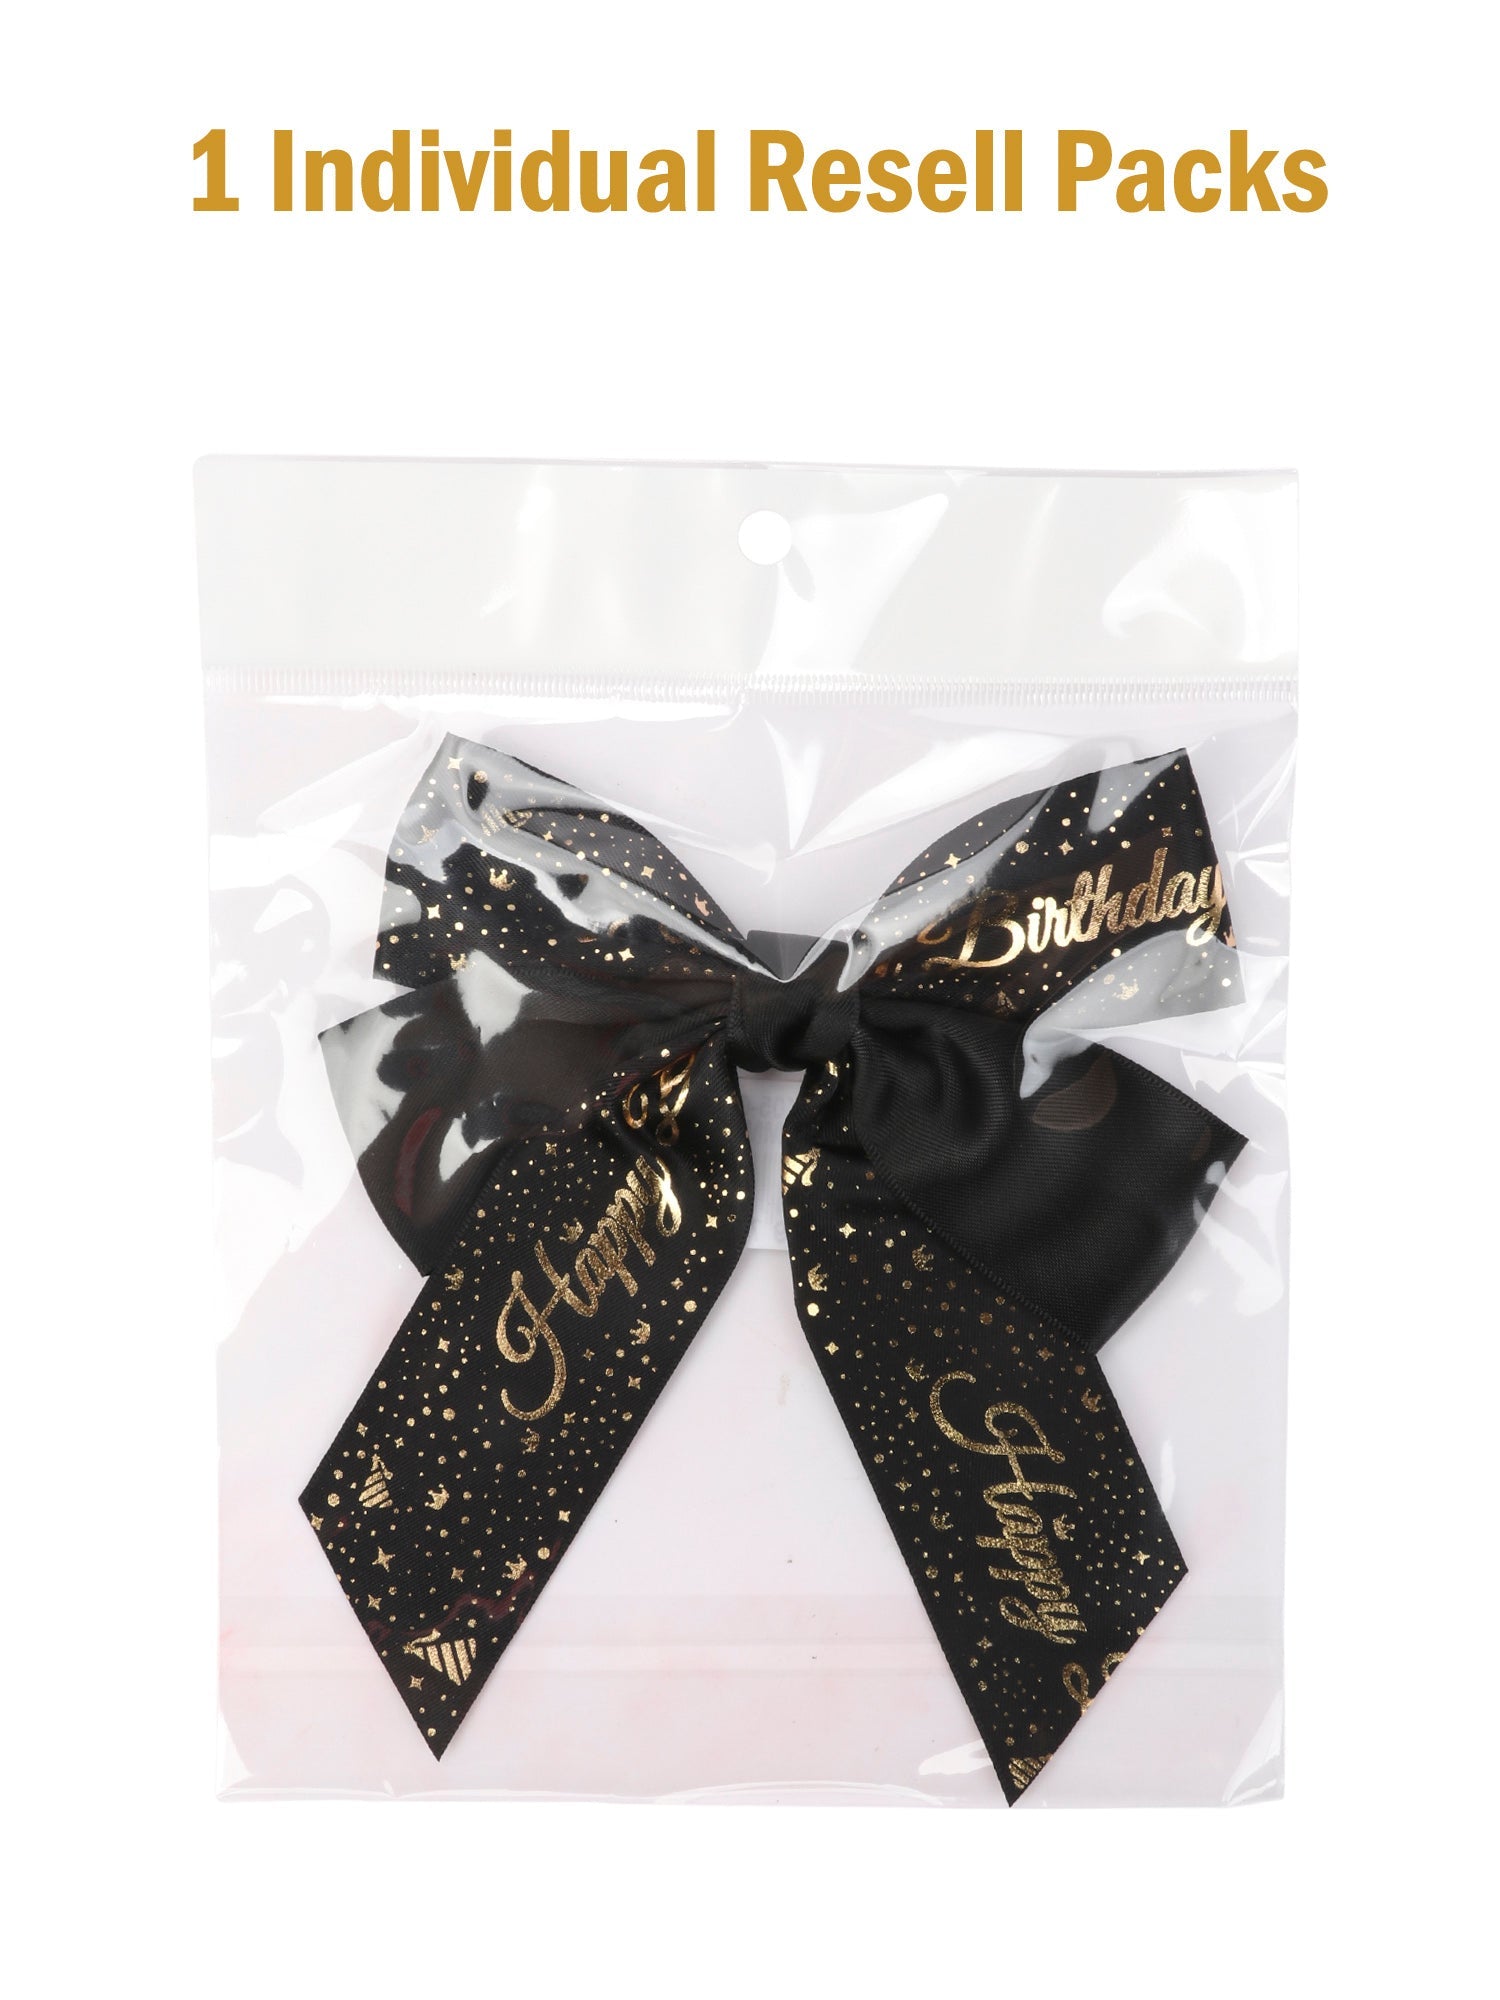 5 1/2" x 6 3/8" Double Face Satin Luxury Happy Birthday Gift Bow Bundle - Black/Gold - 12 Bows/Bundle